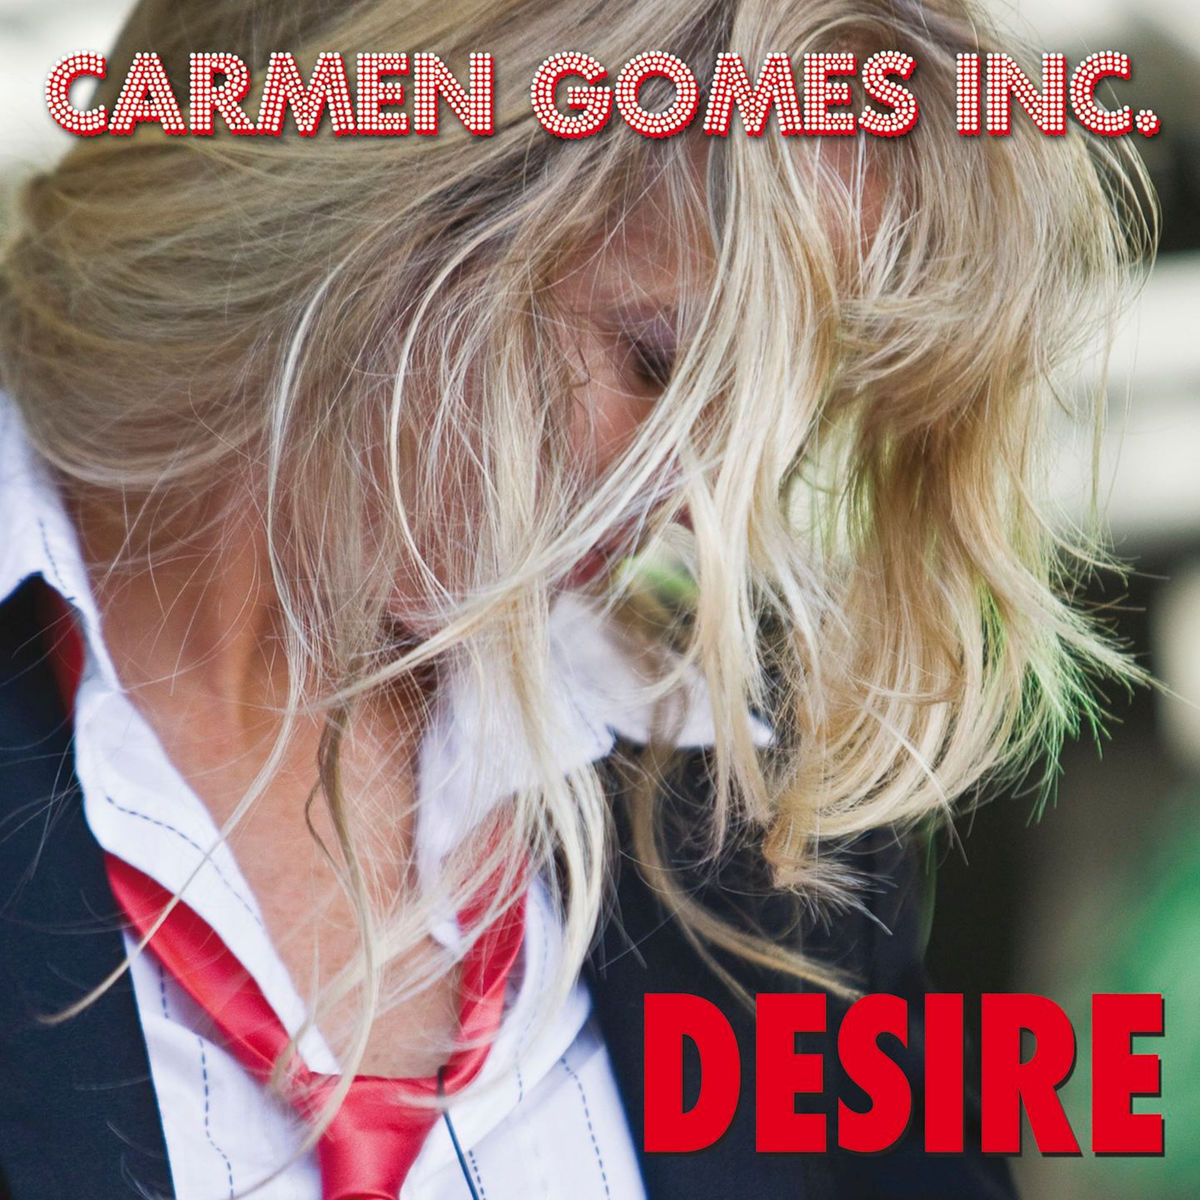 Carmen Gomes Inc - Desire 2010